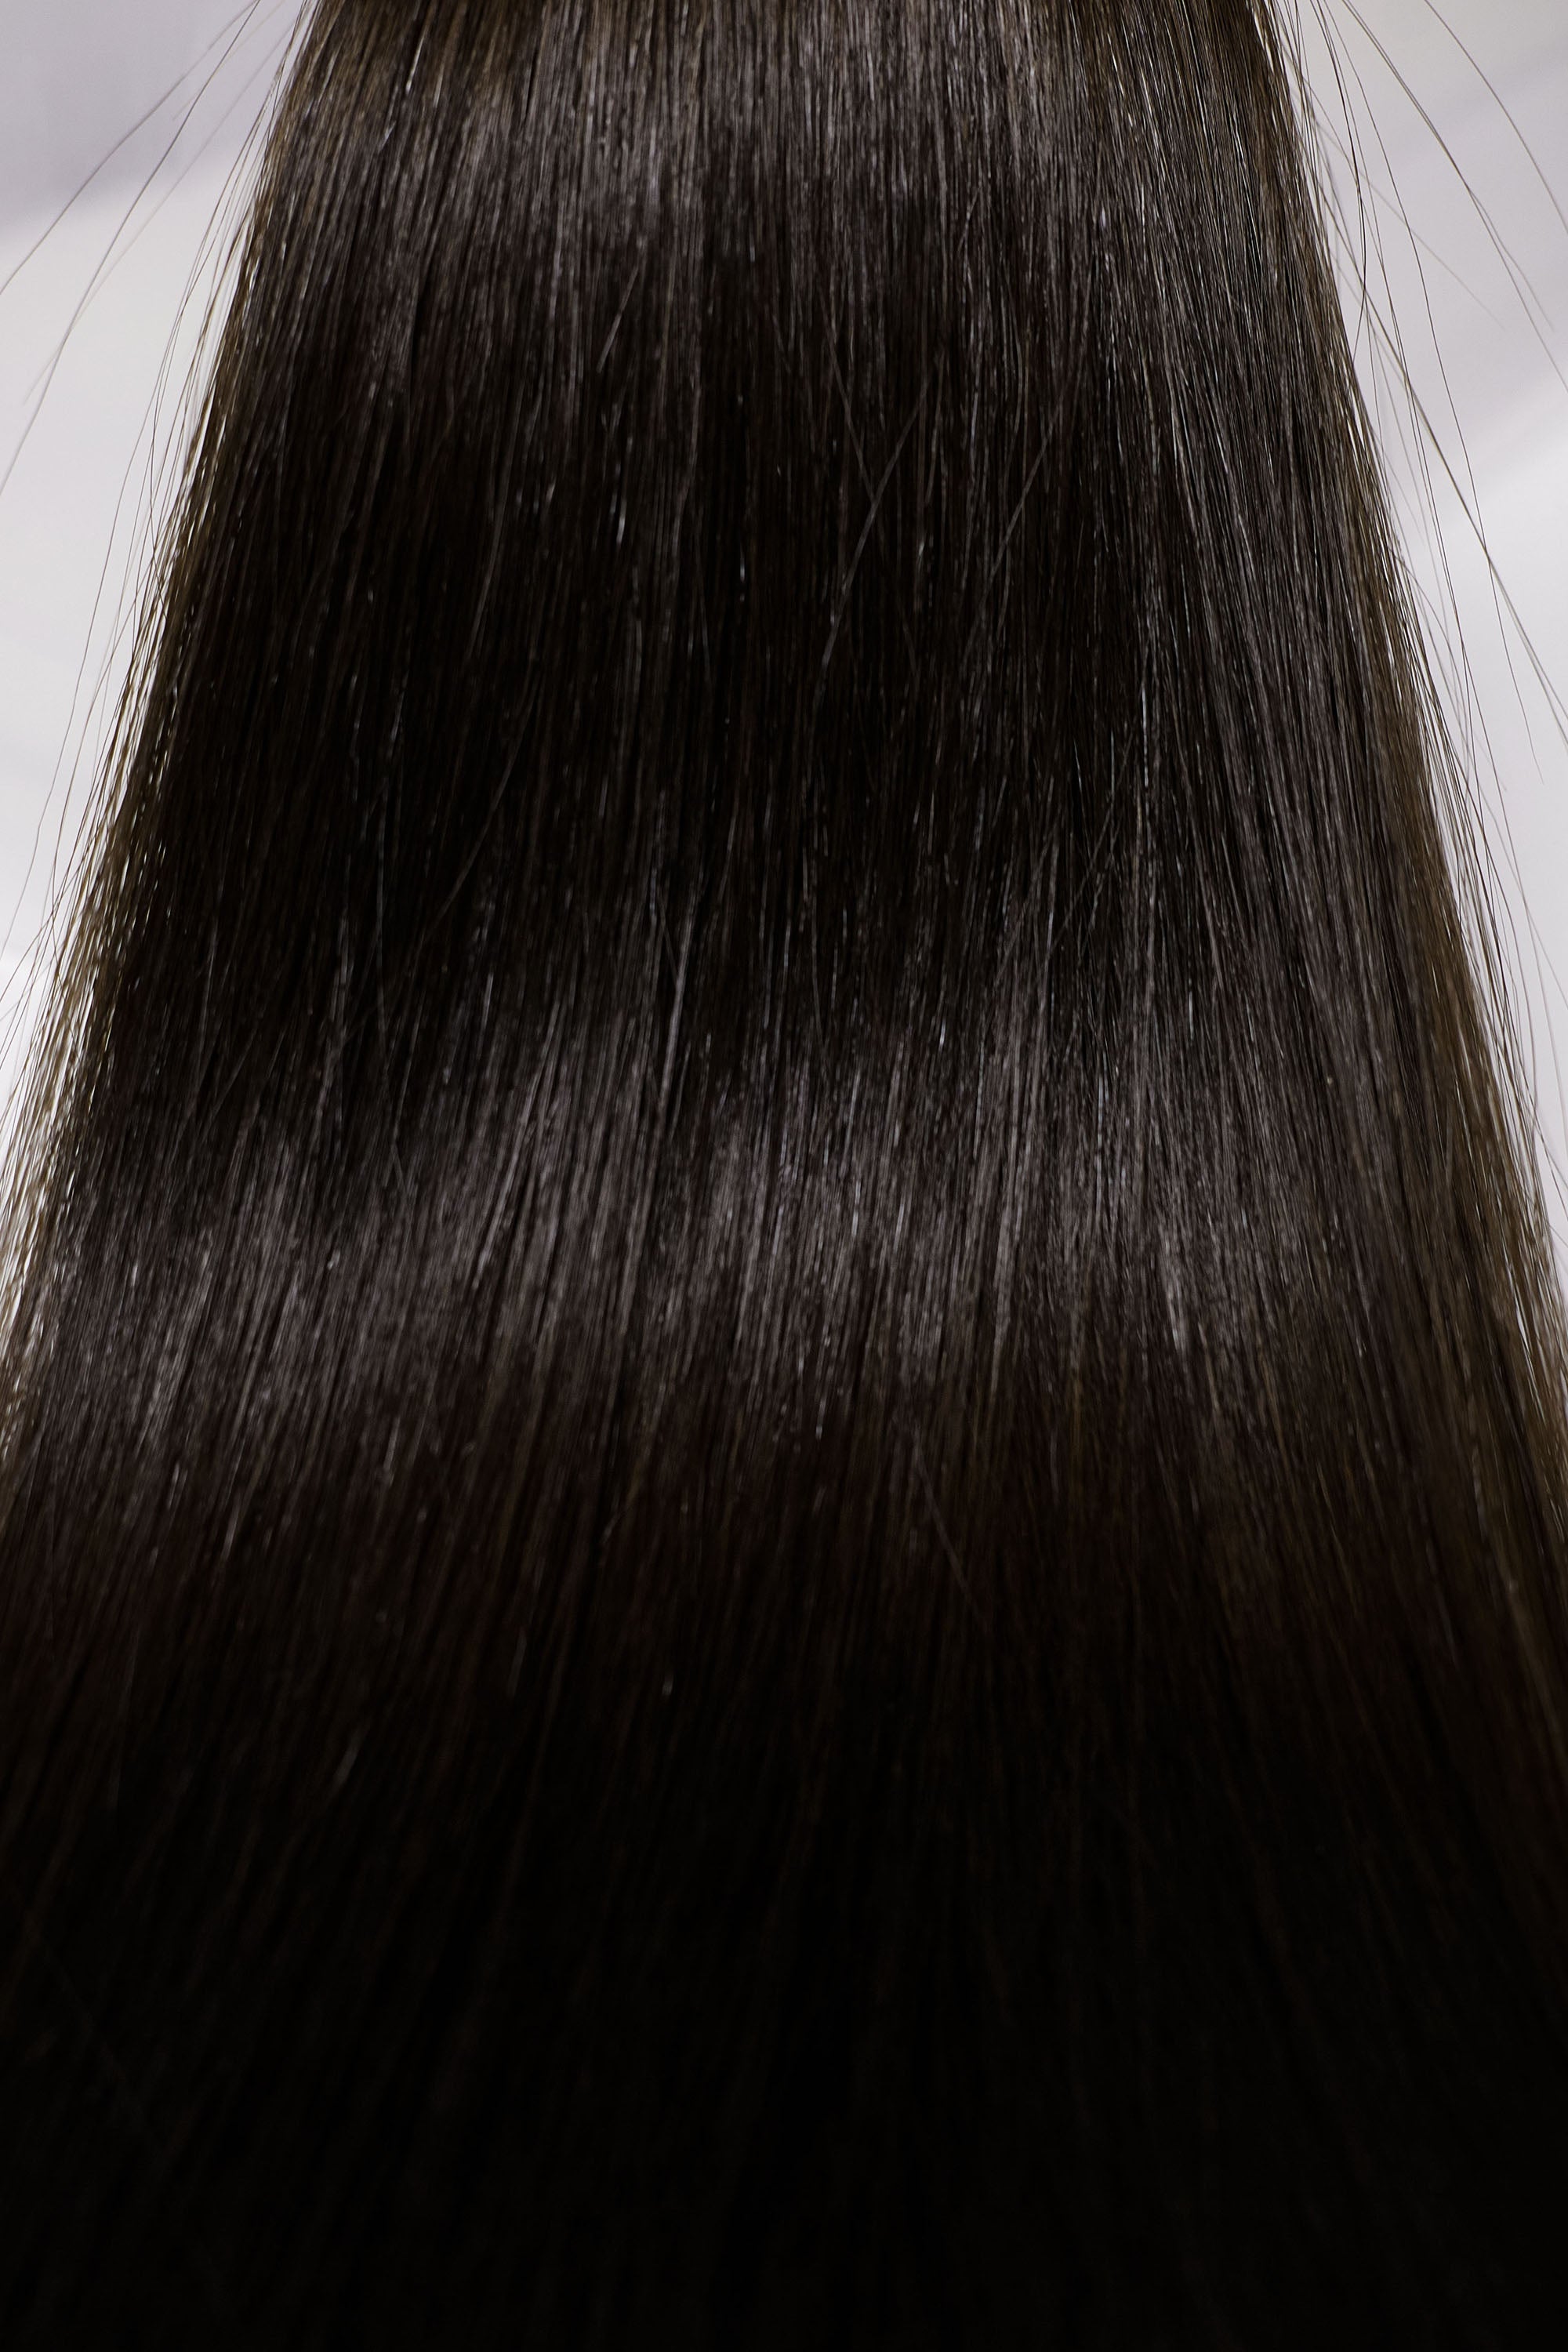 Behair professional Keratin Tip "Premium" 20" (50cm) Natural Straight Natural Black #1B - 25g (1g each pcs) hair extensions